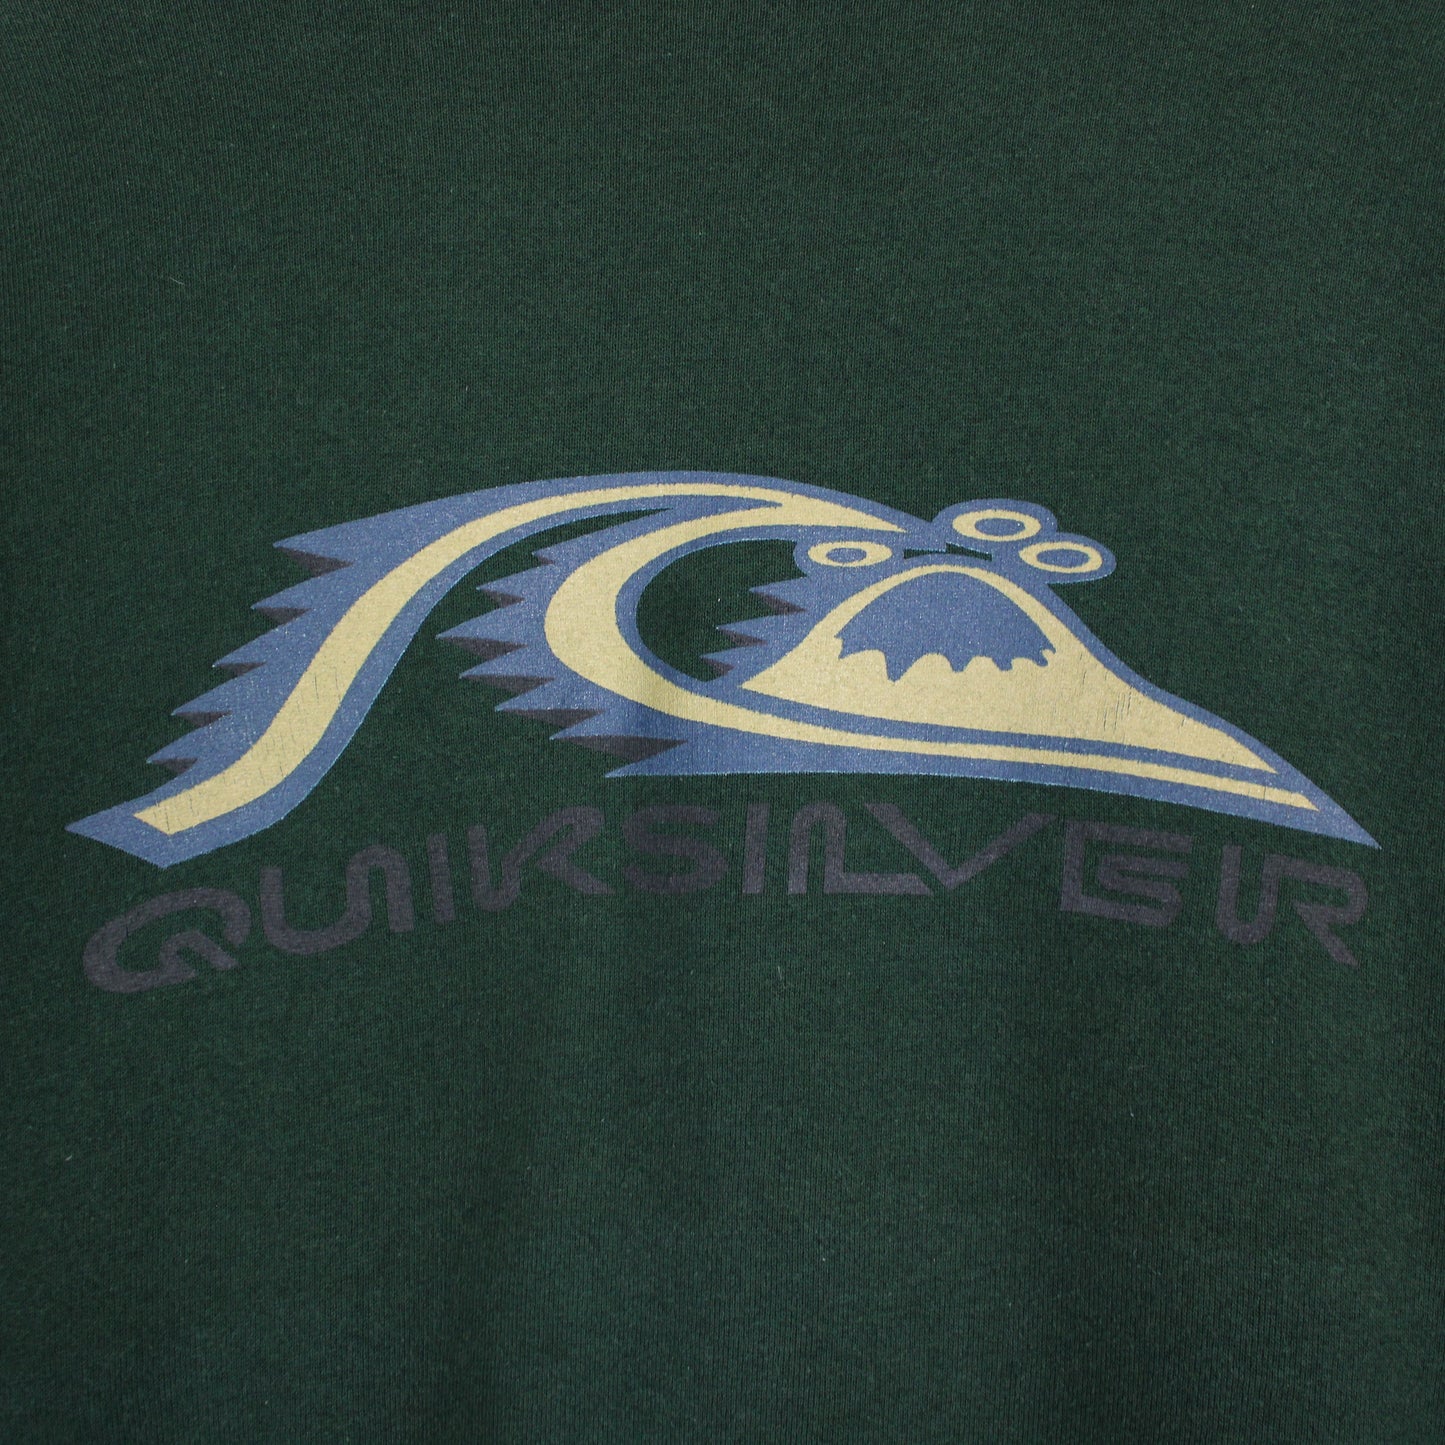 Vintage Quiksilver Graphic Sweatshirt - L